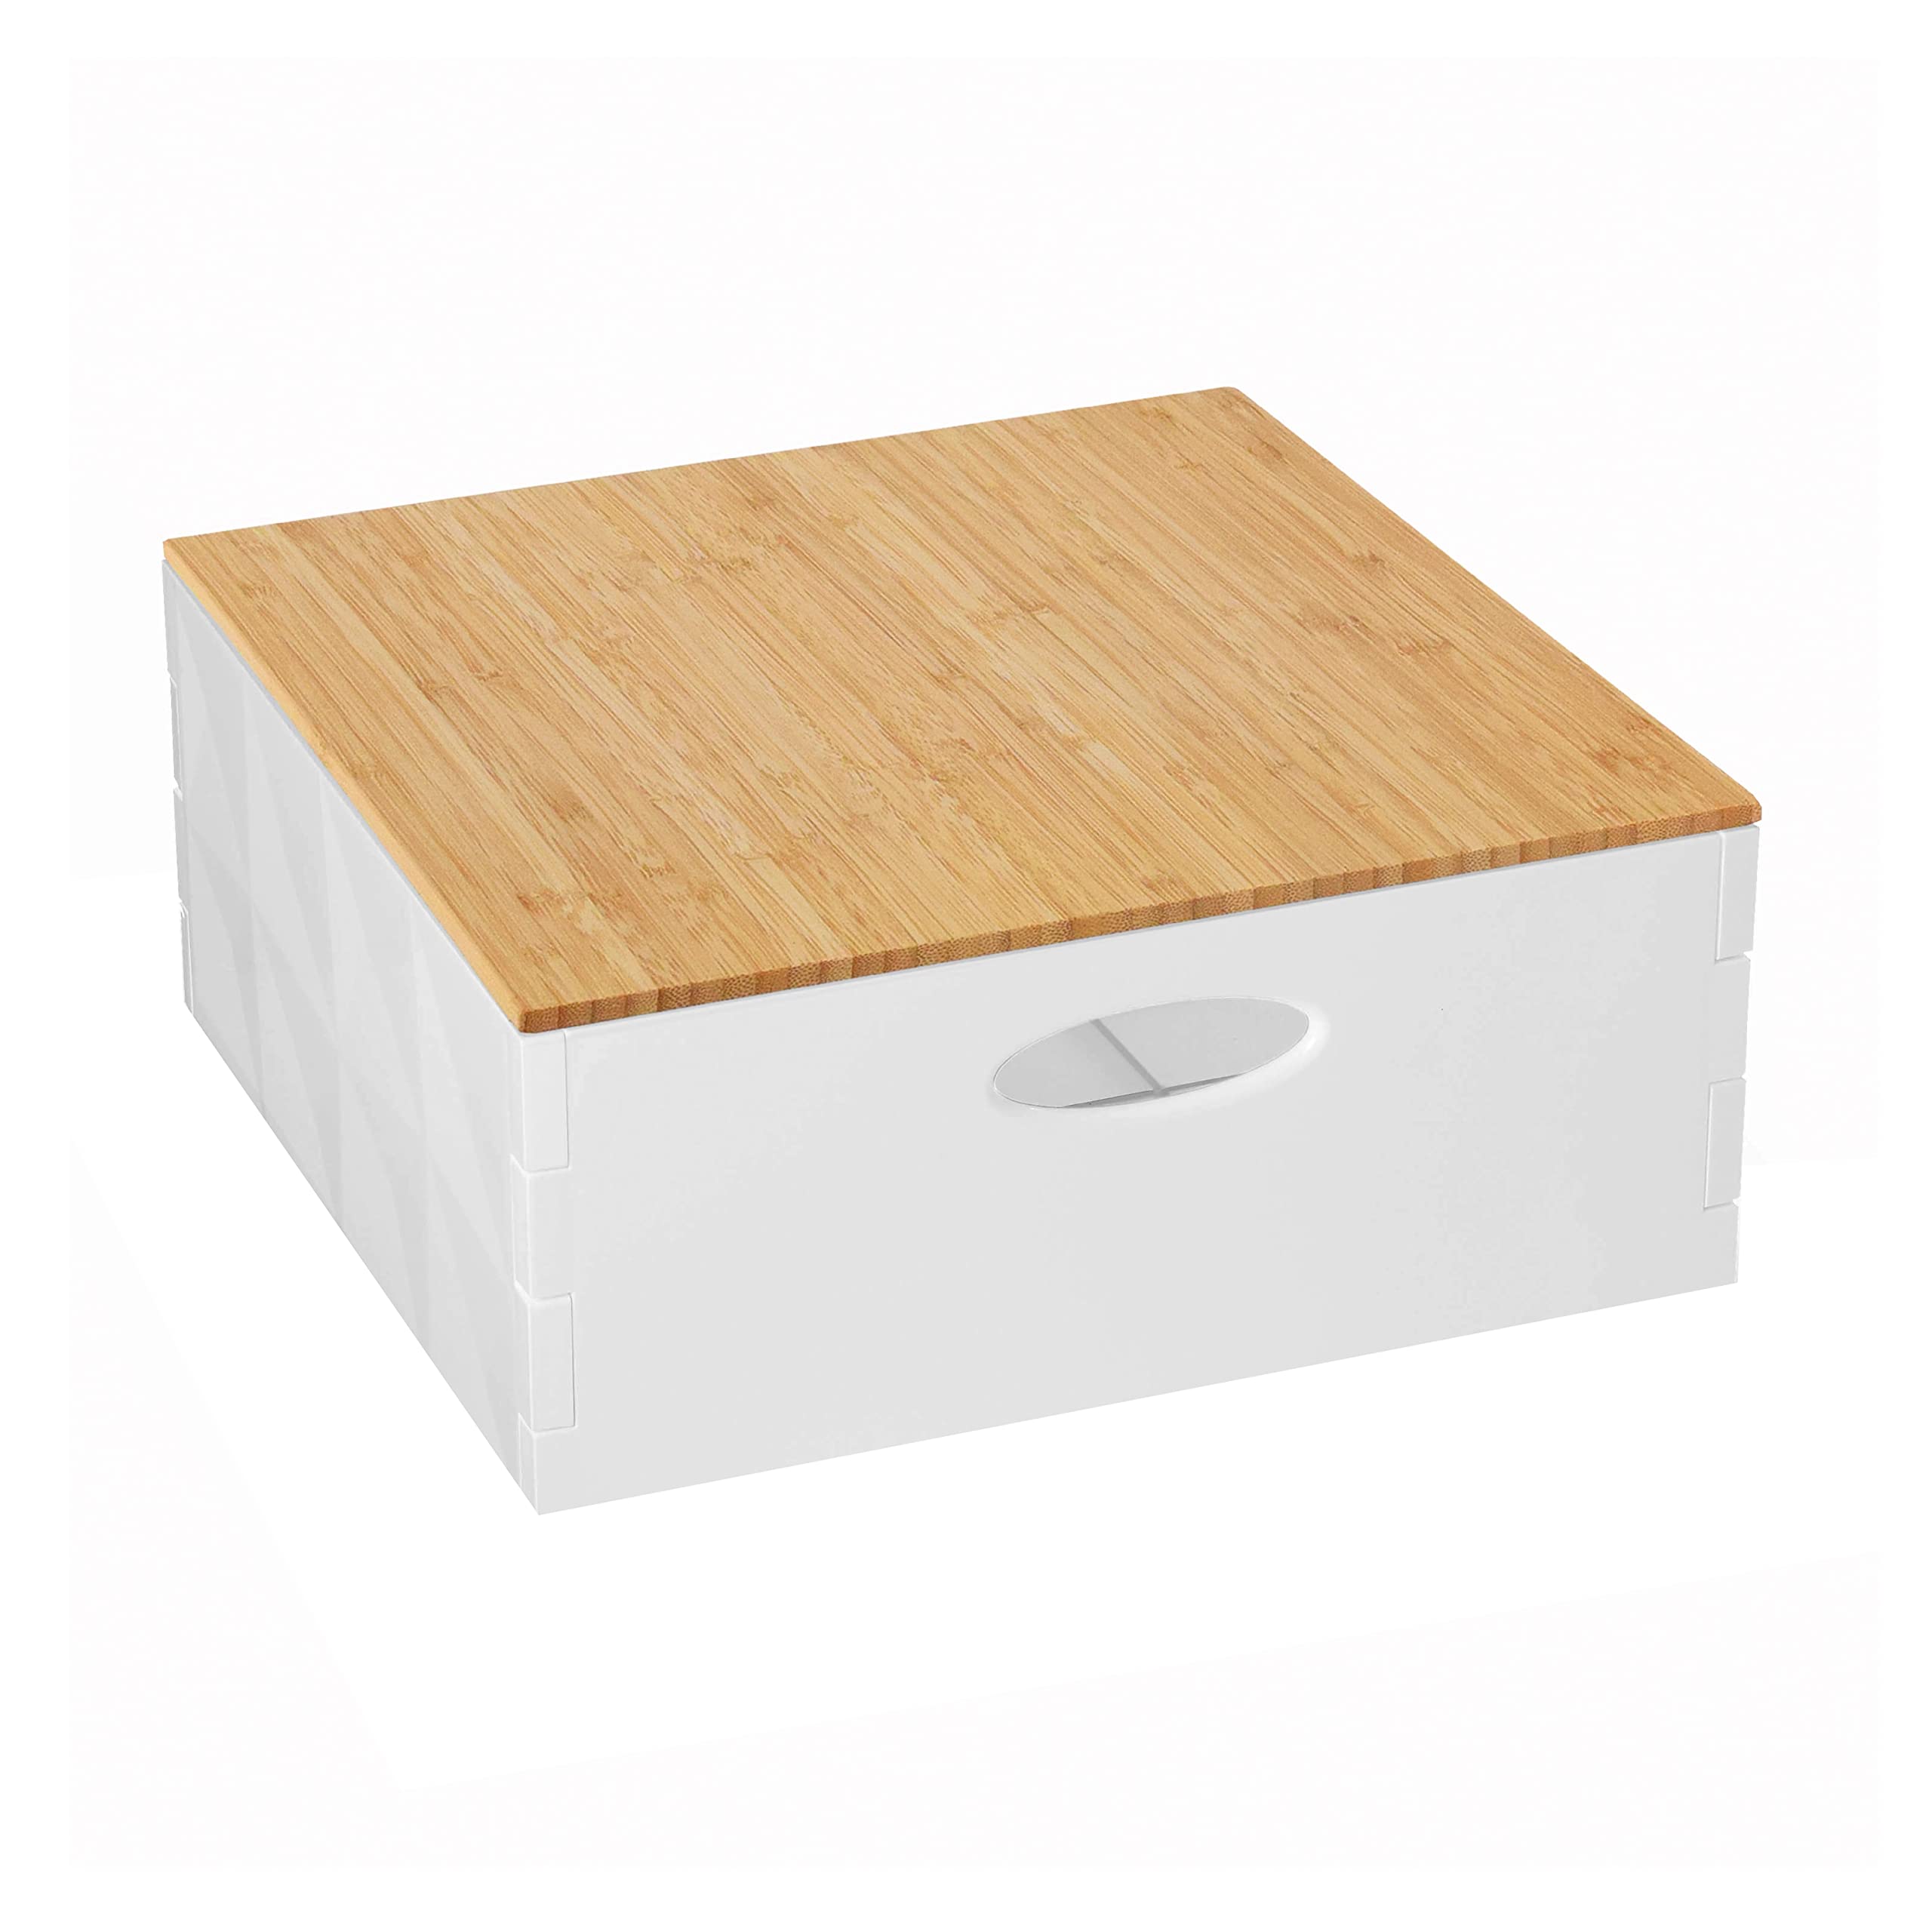 Home+Solutions Plastic and Bamboo White Medium Crystal Bin - Multipurpose Storage Container (81521) Medium White